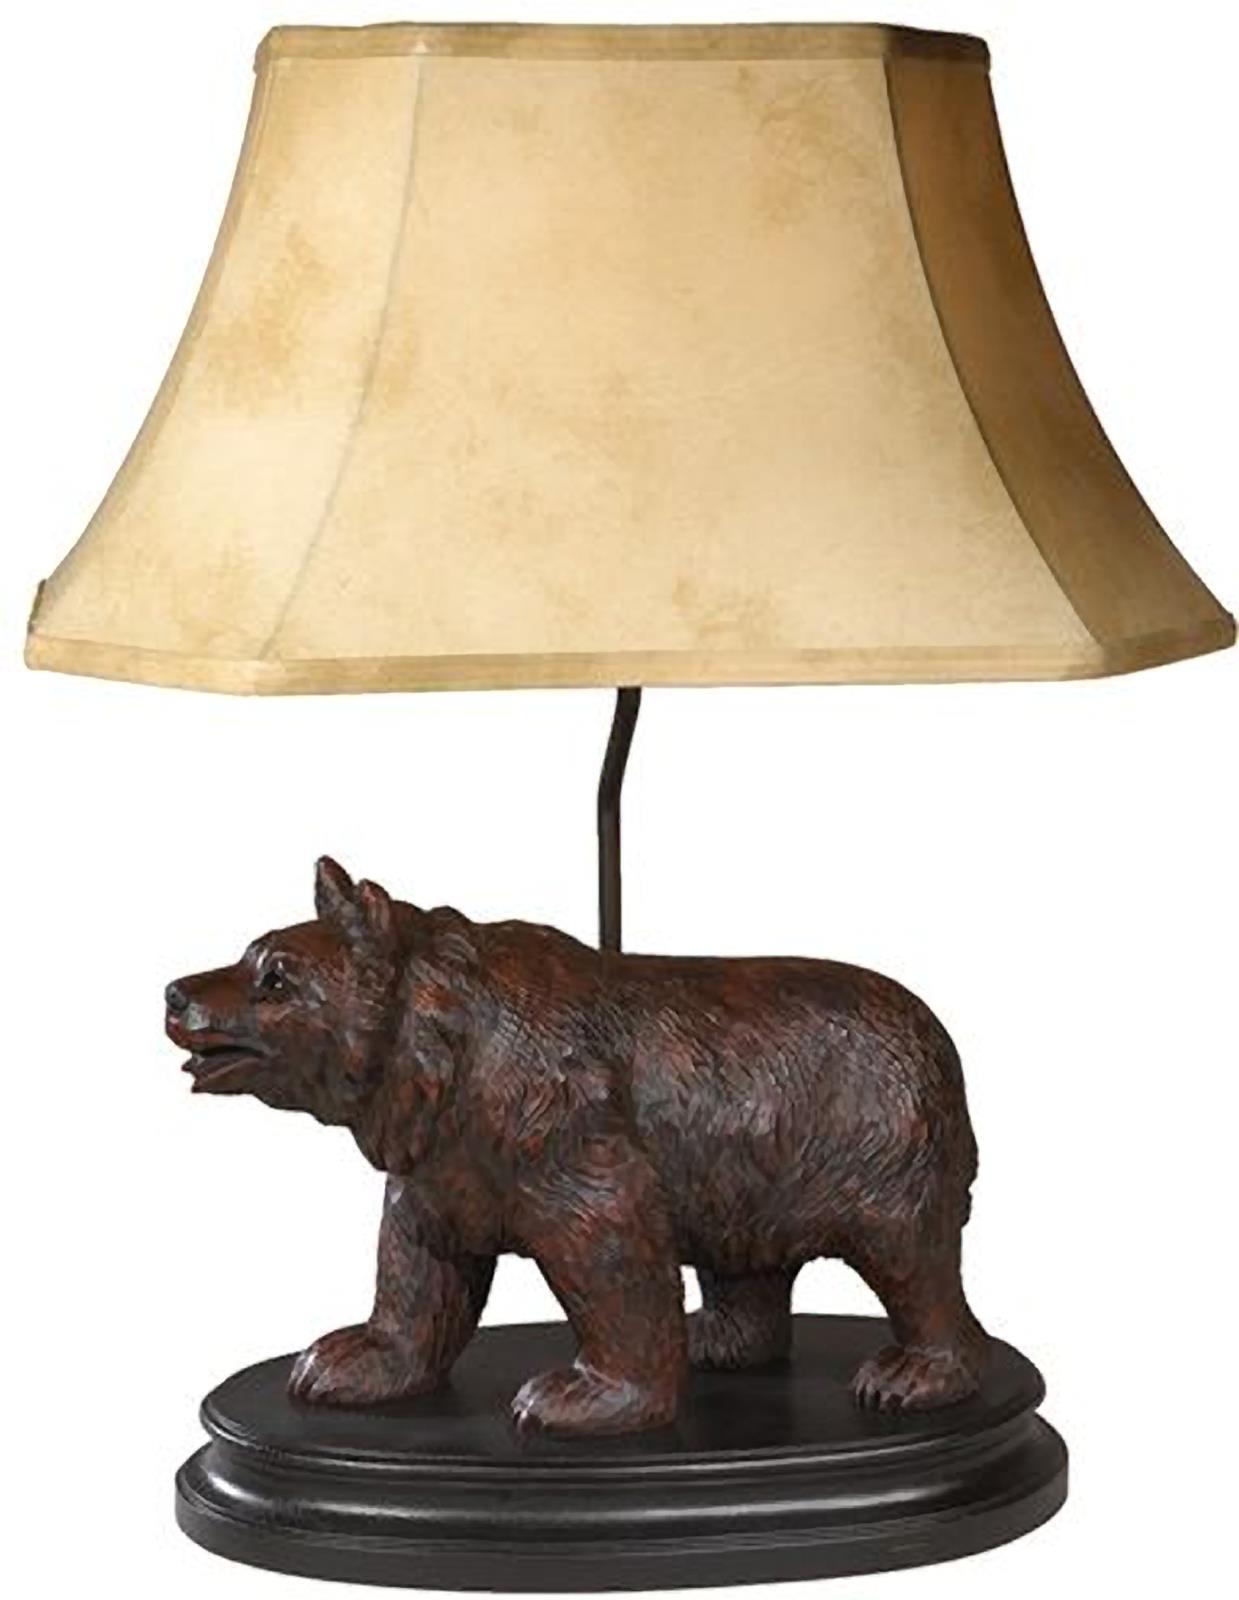 Table Lamp Walking Bear Hand Painted OK Casting 3 Way, Linen Shade, USA Made-Image 1